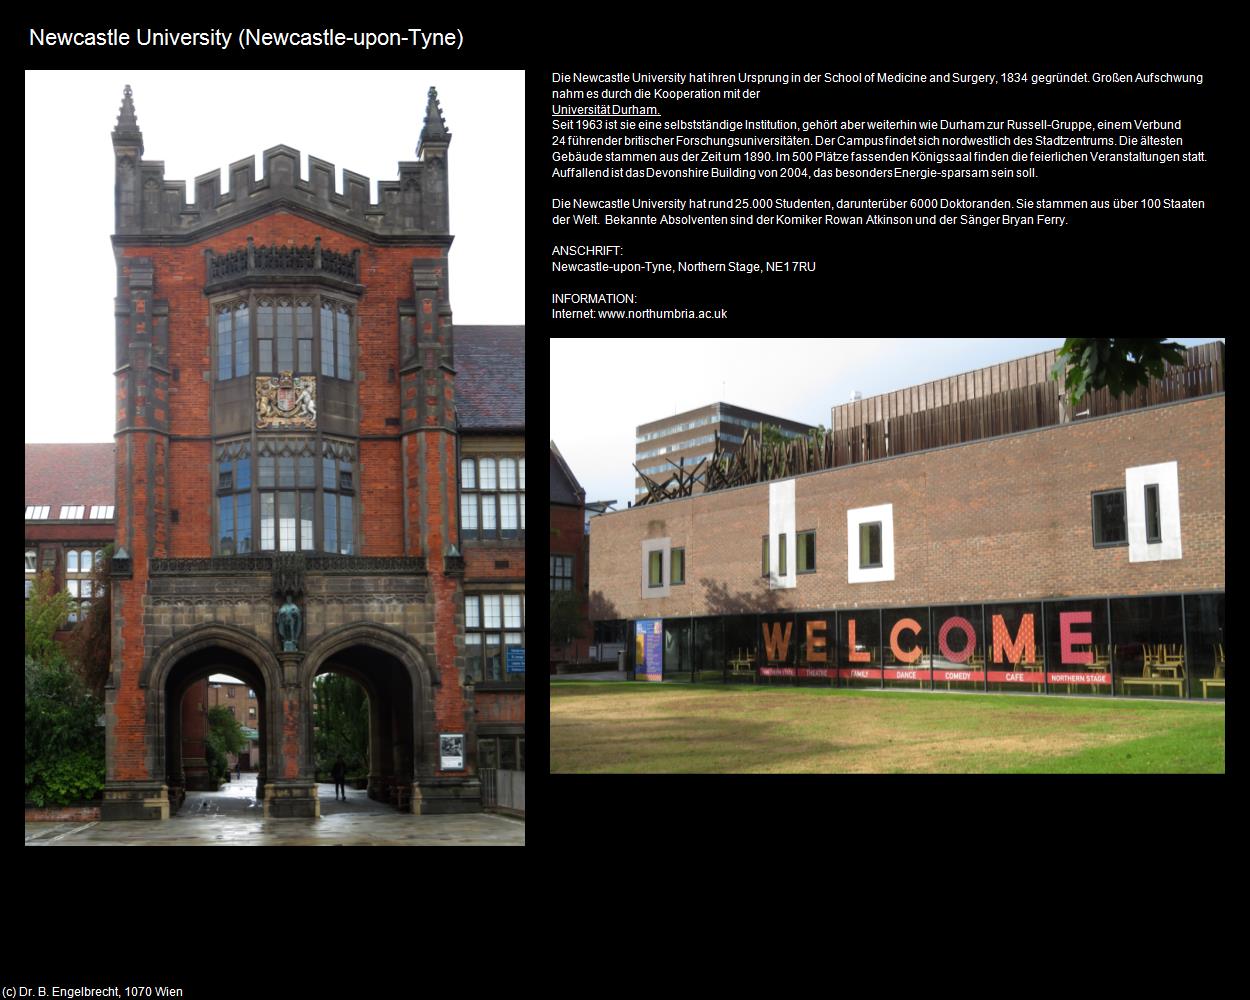 Newcastle University  (Newcastle-upon-Tyne, England) in Kulturatlas-ENGLAND und WALES(c)B.Engelbrecht